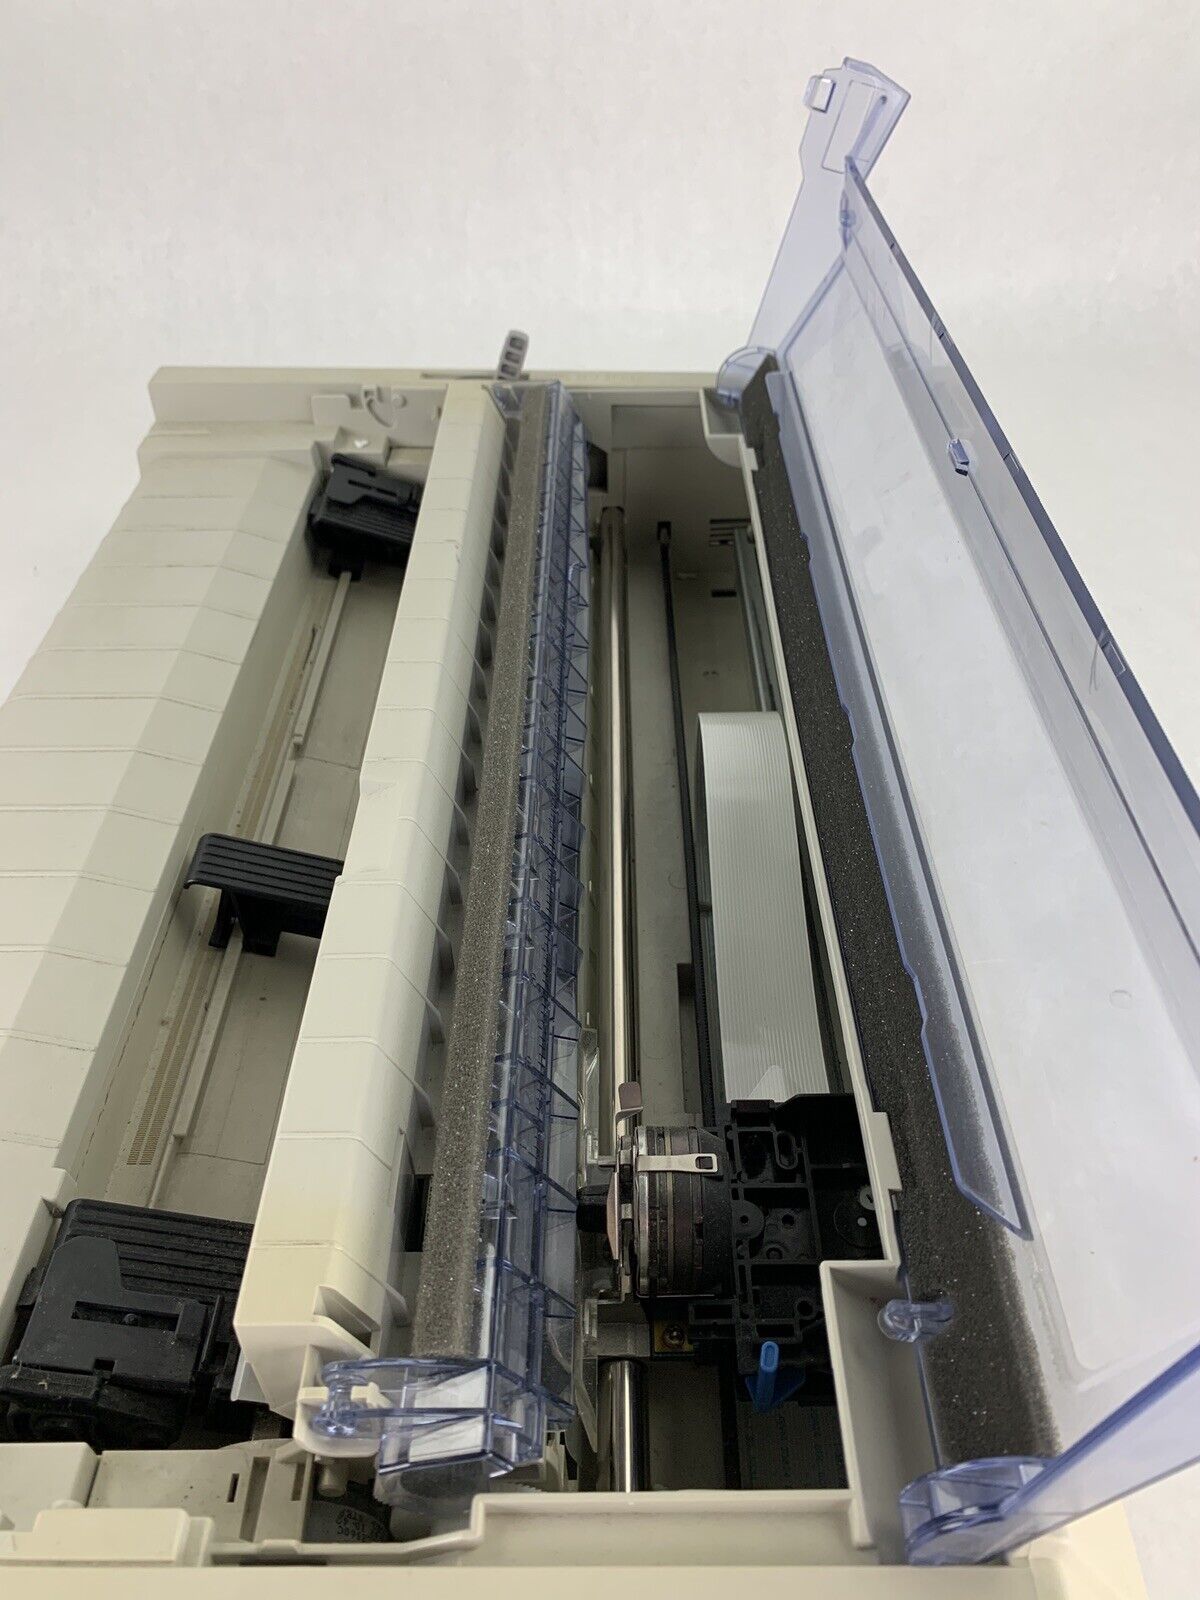 OKI Data Microline 391 Turbo 9 Pin Printer GE7300A For Parts and Repair